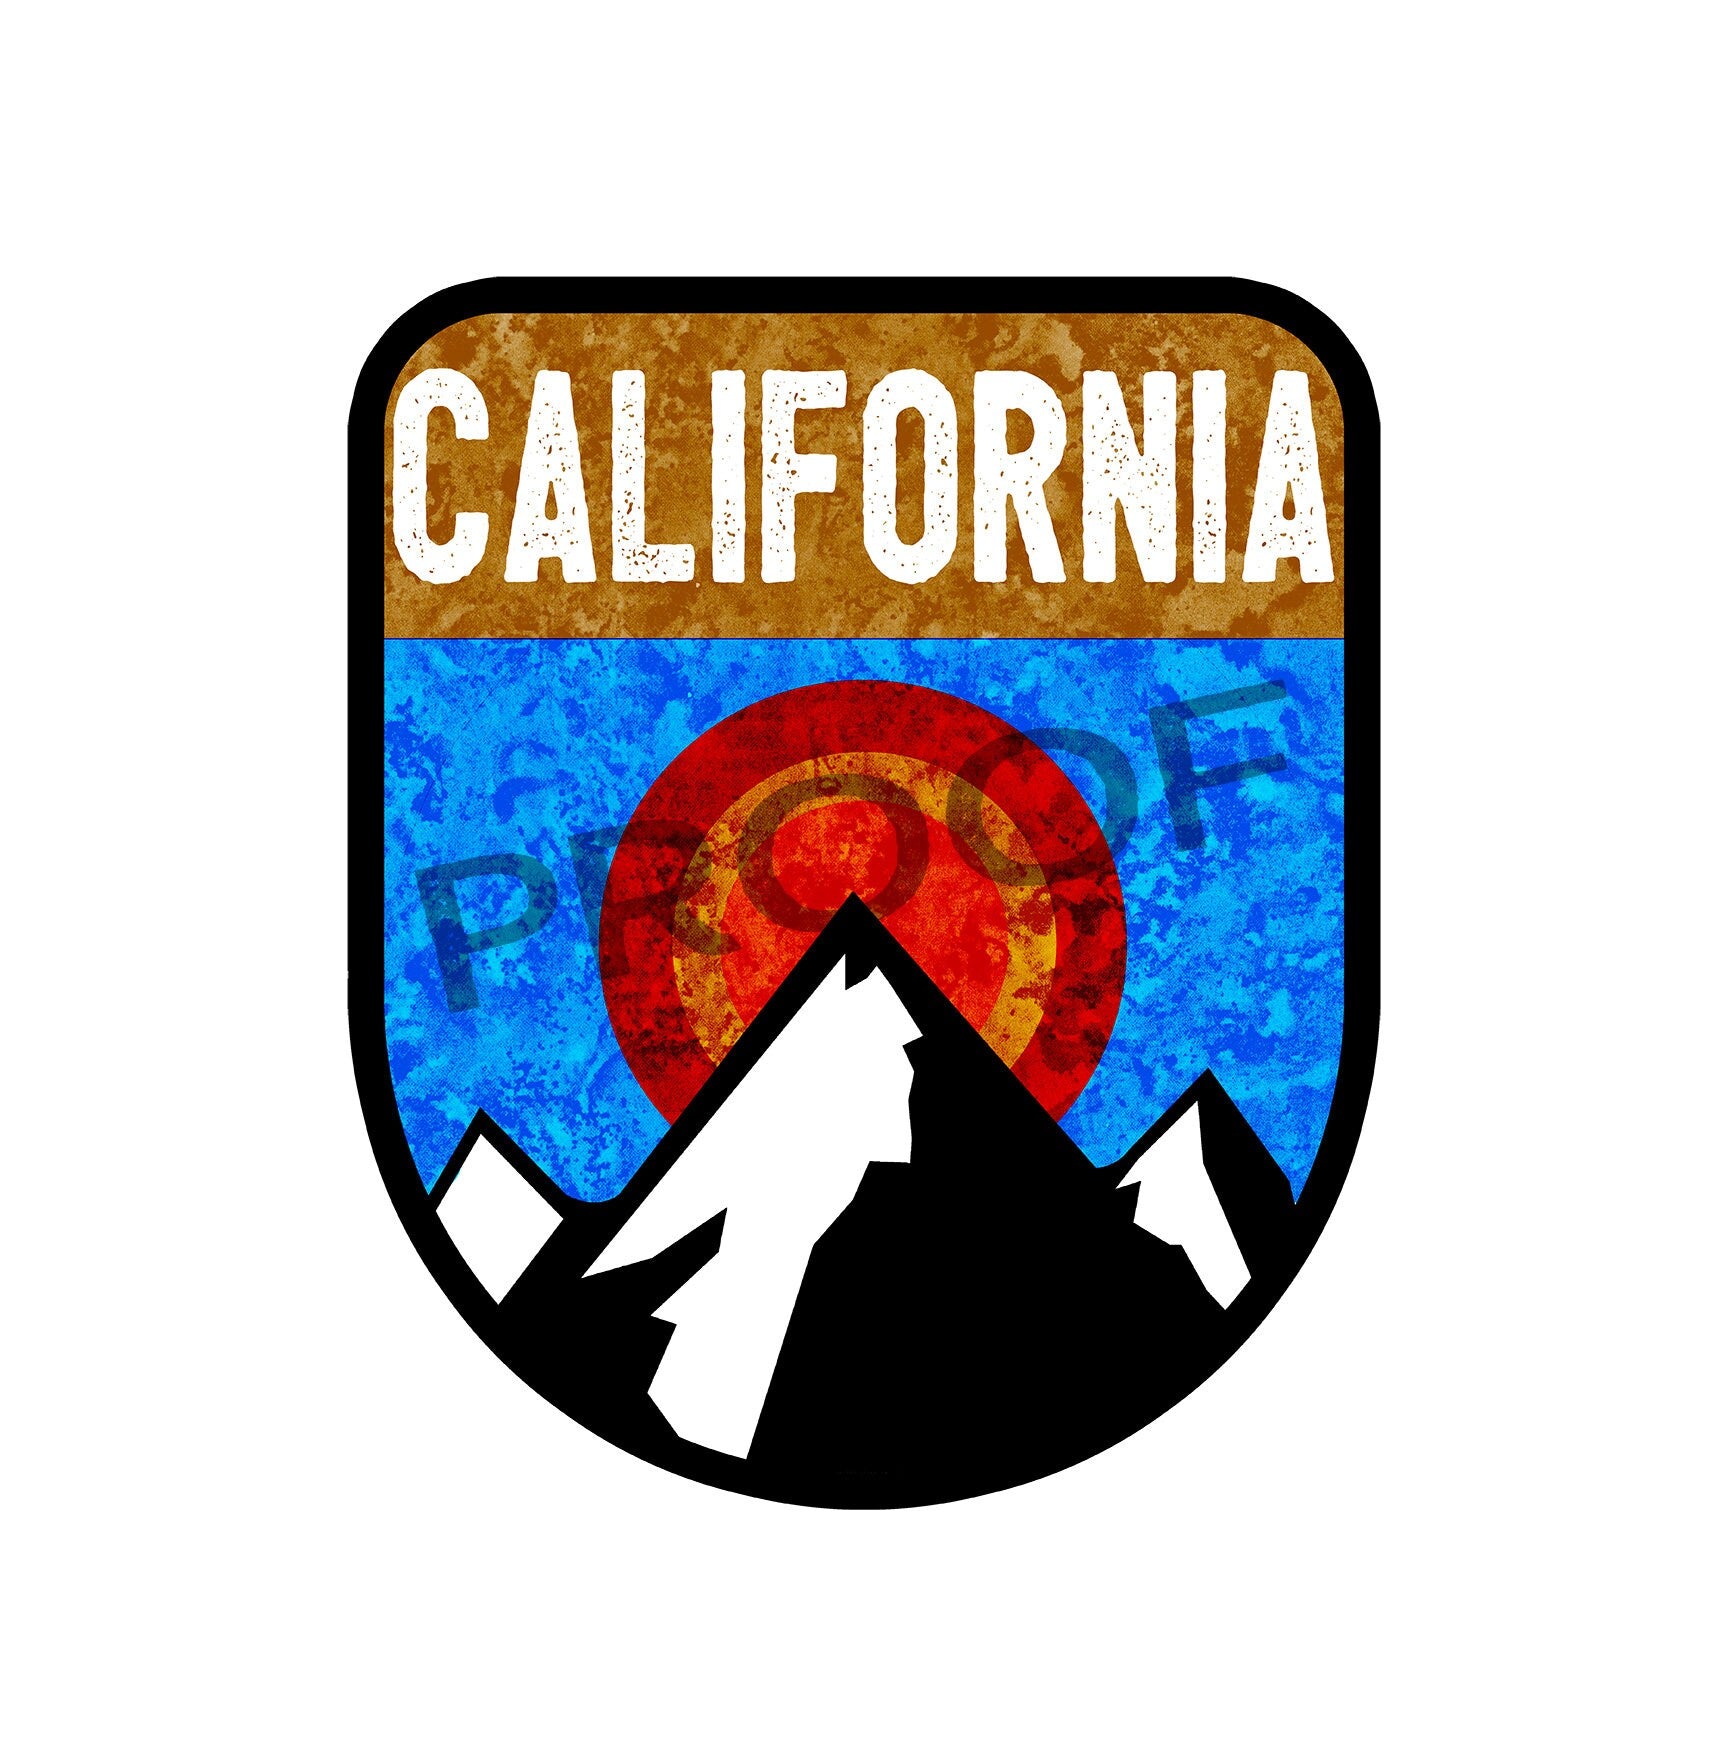 CALIFORNIA Mountains Outdoors Decal Sticker Vinyl Nature Skiing Big Bear Tahoe Hiking Climb Hike Camp Camping Yosemite Redwood Lassen